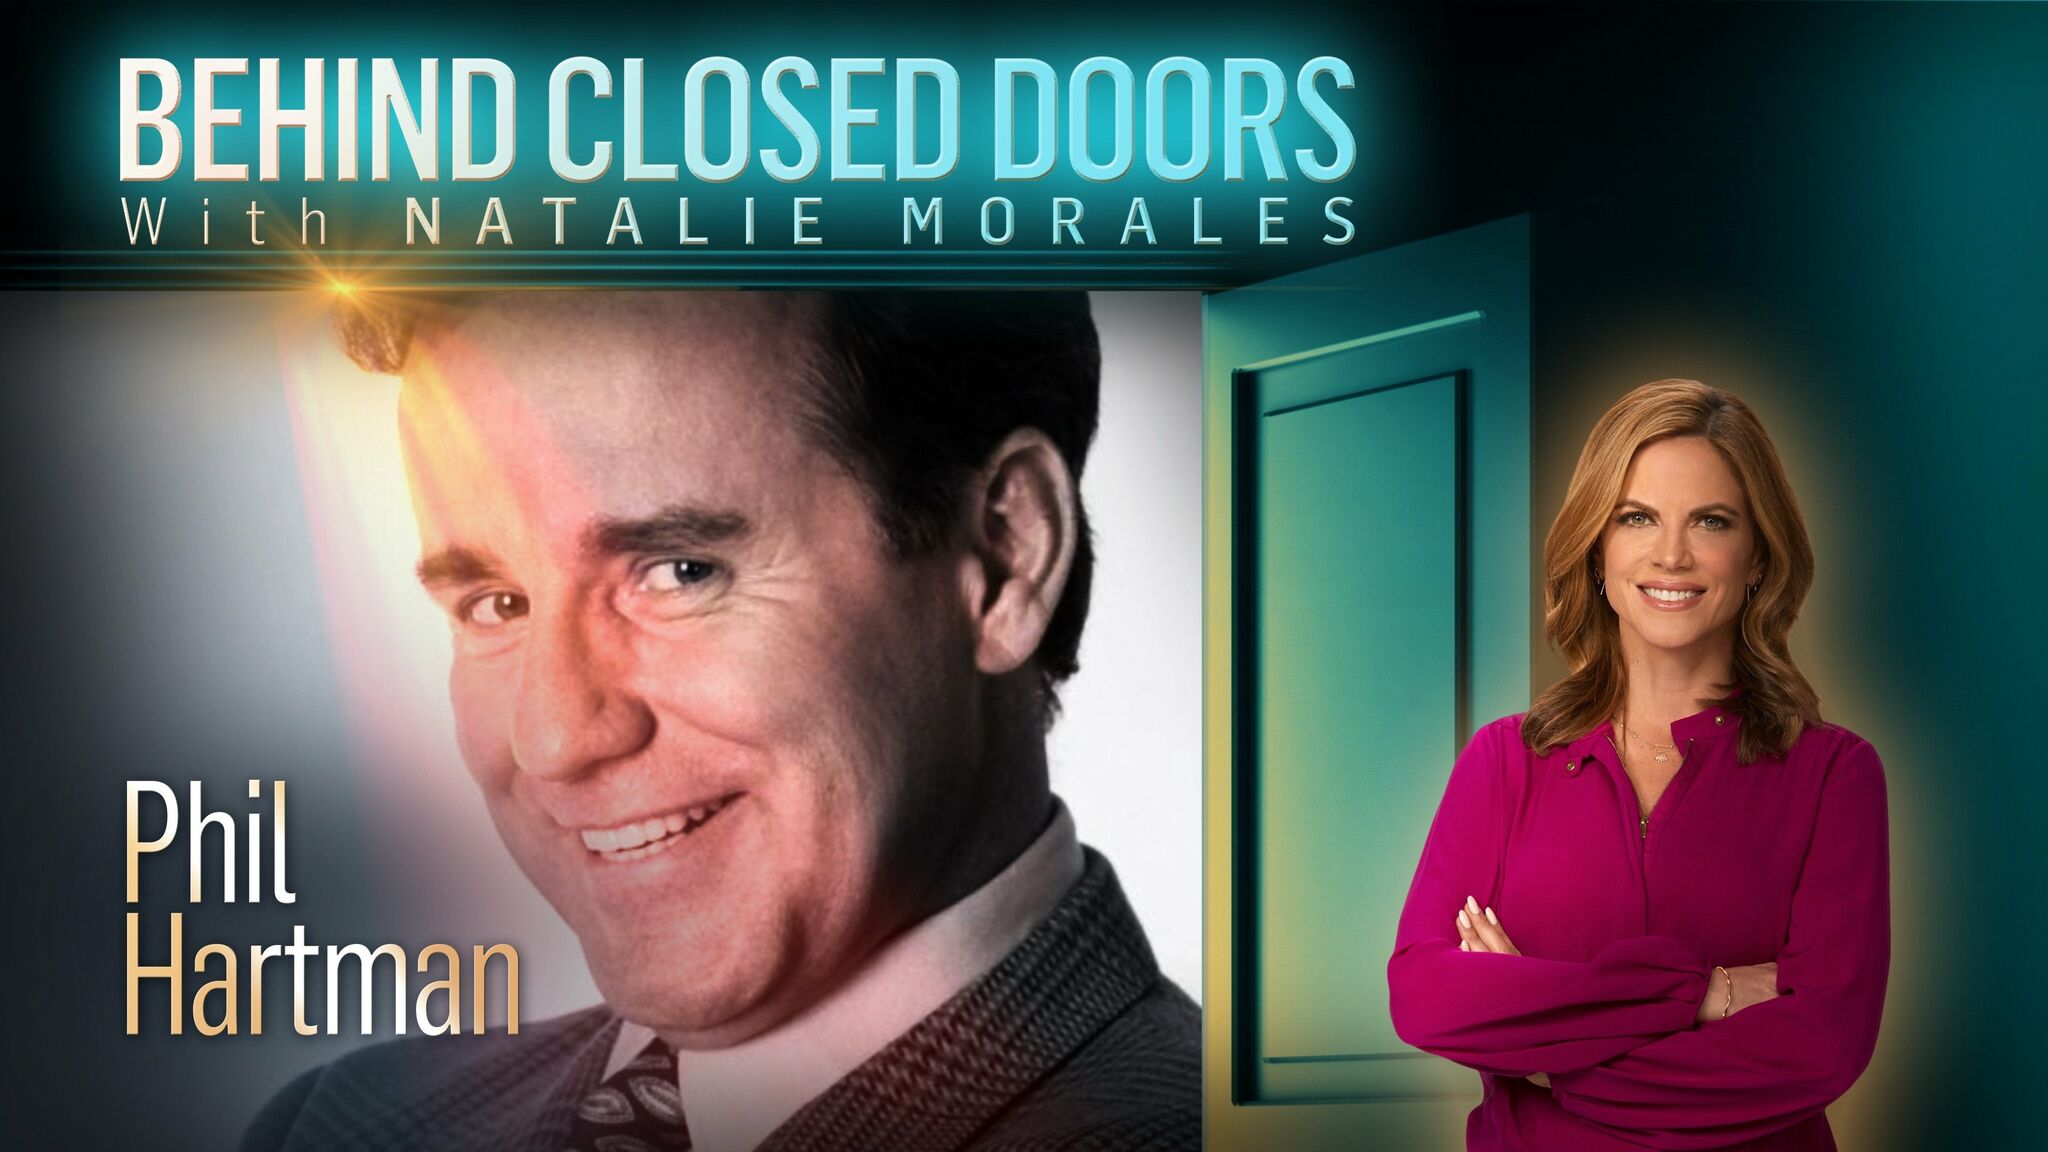 "Phil Hartman: Behind Closed Doors"